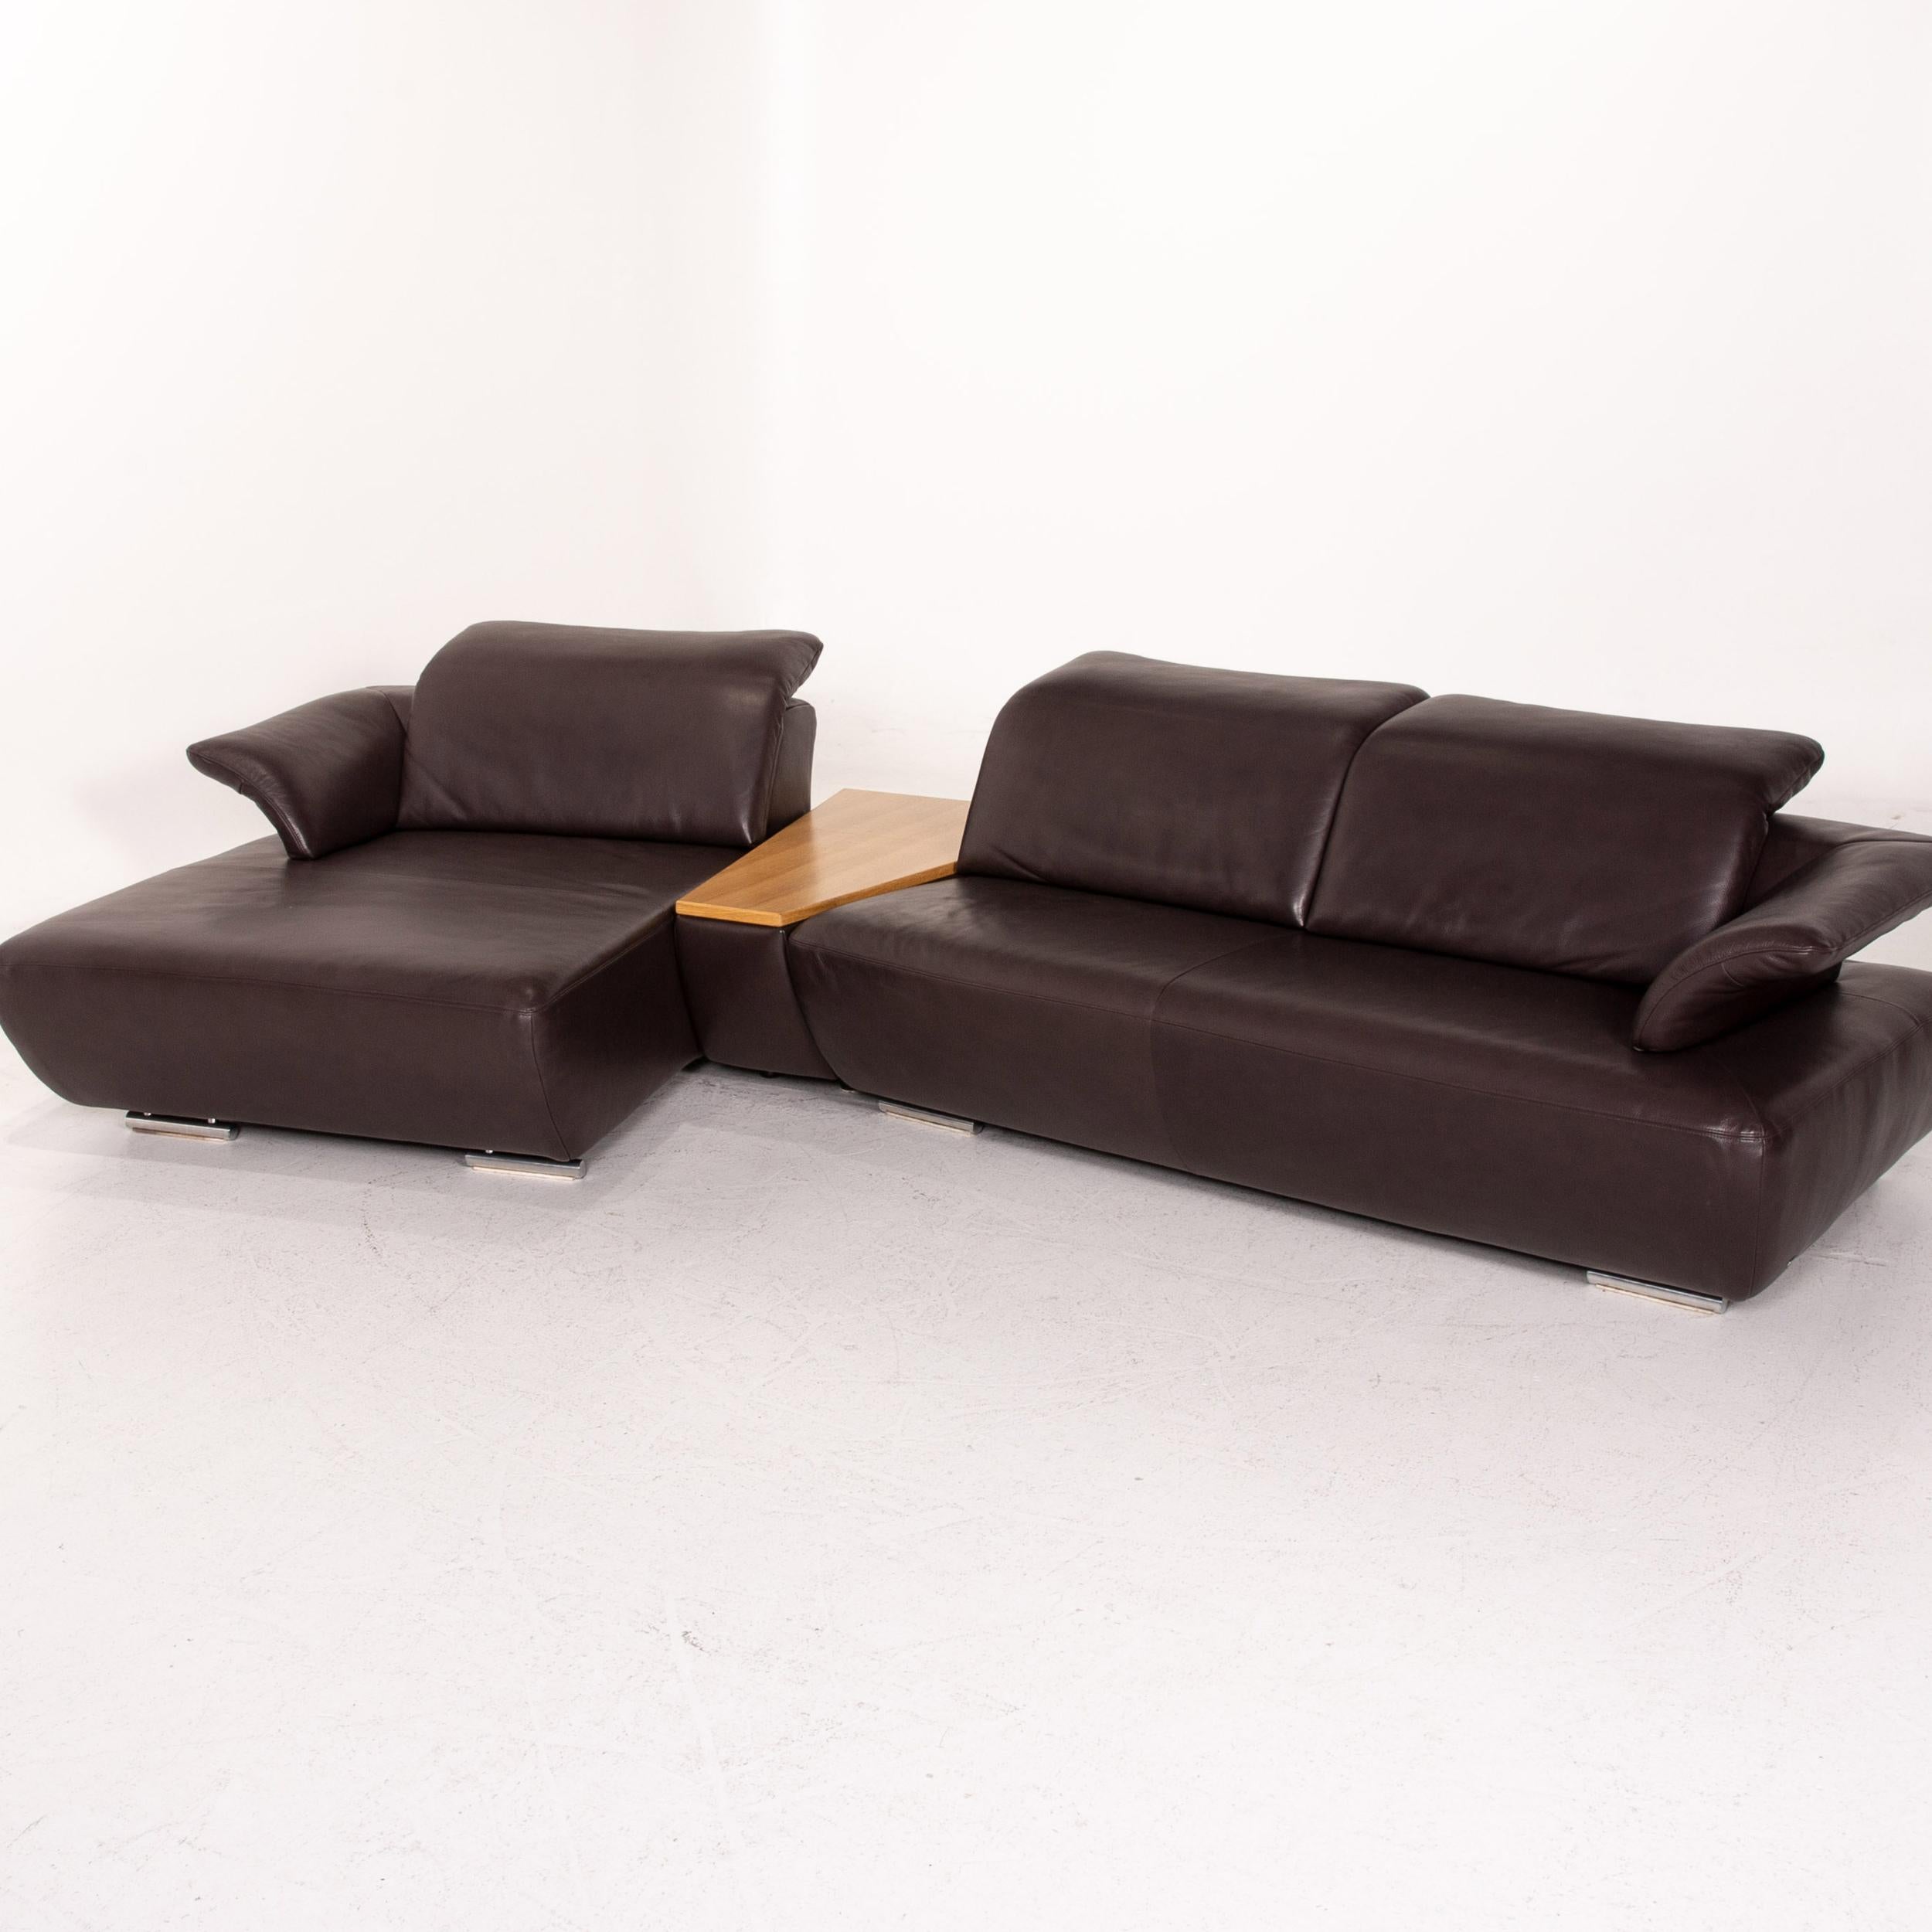 Koinor Avanti Leather Corner Sofa Brown Dark Brown Wood Function Sofa Couch For Sale 1